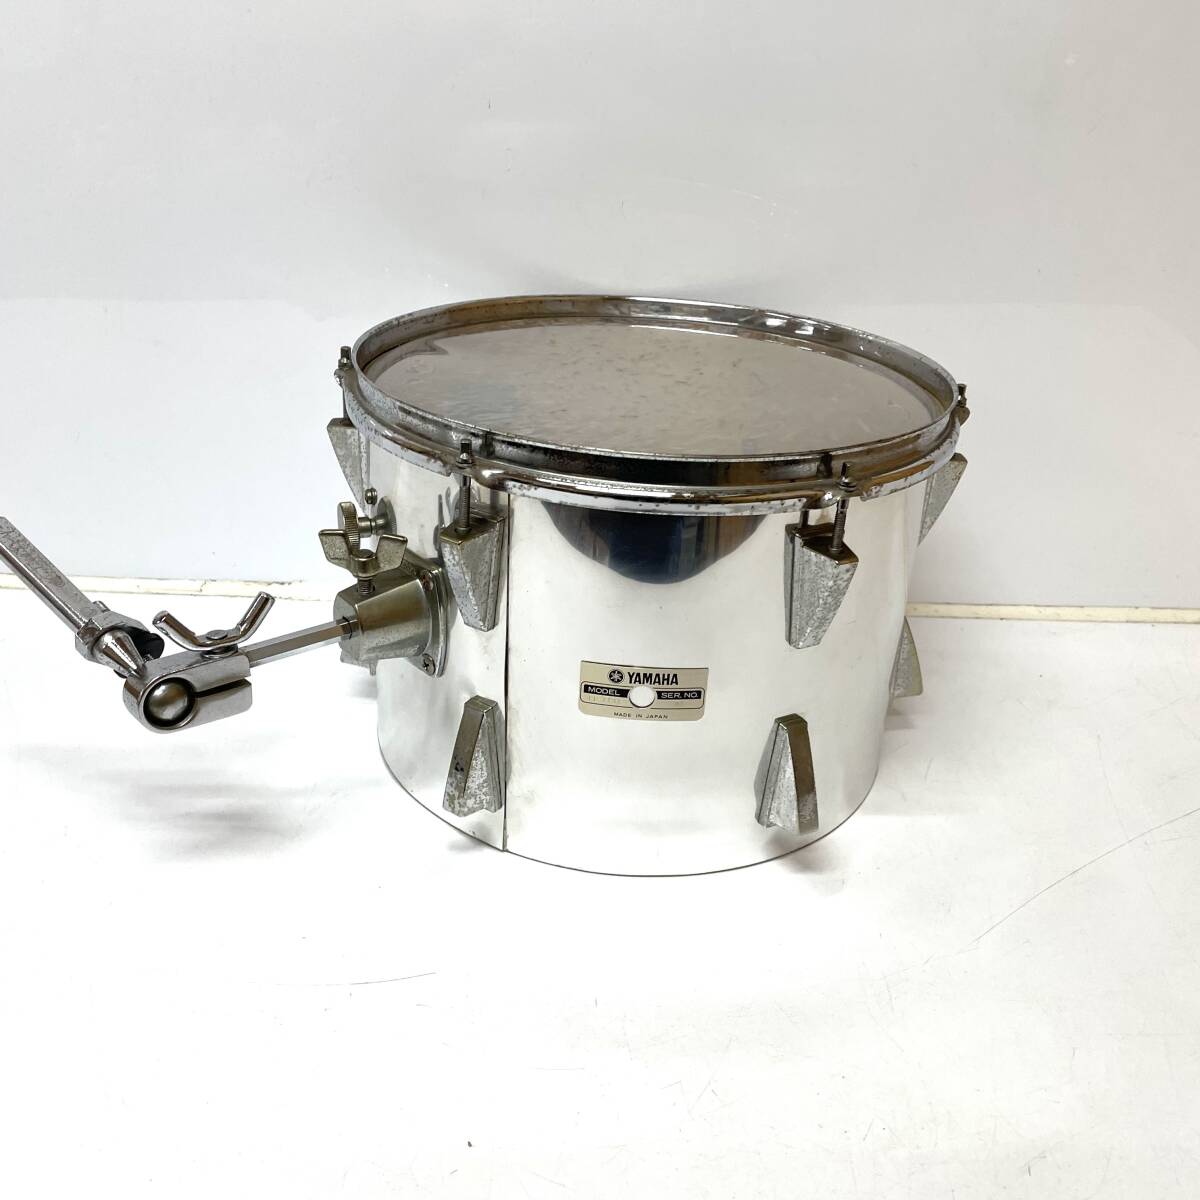 YAMAHA drum TT-713A SER.No MP Yamaha tam-tam used present condition goods 